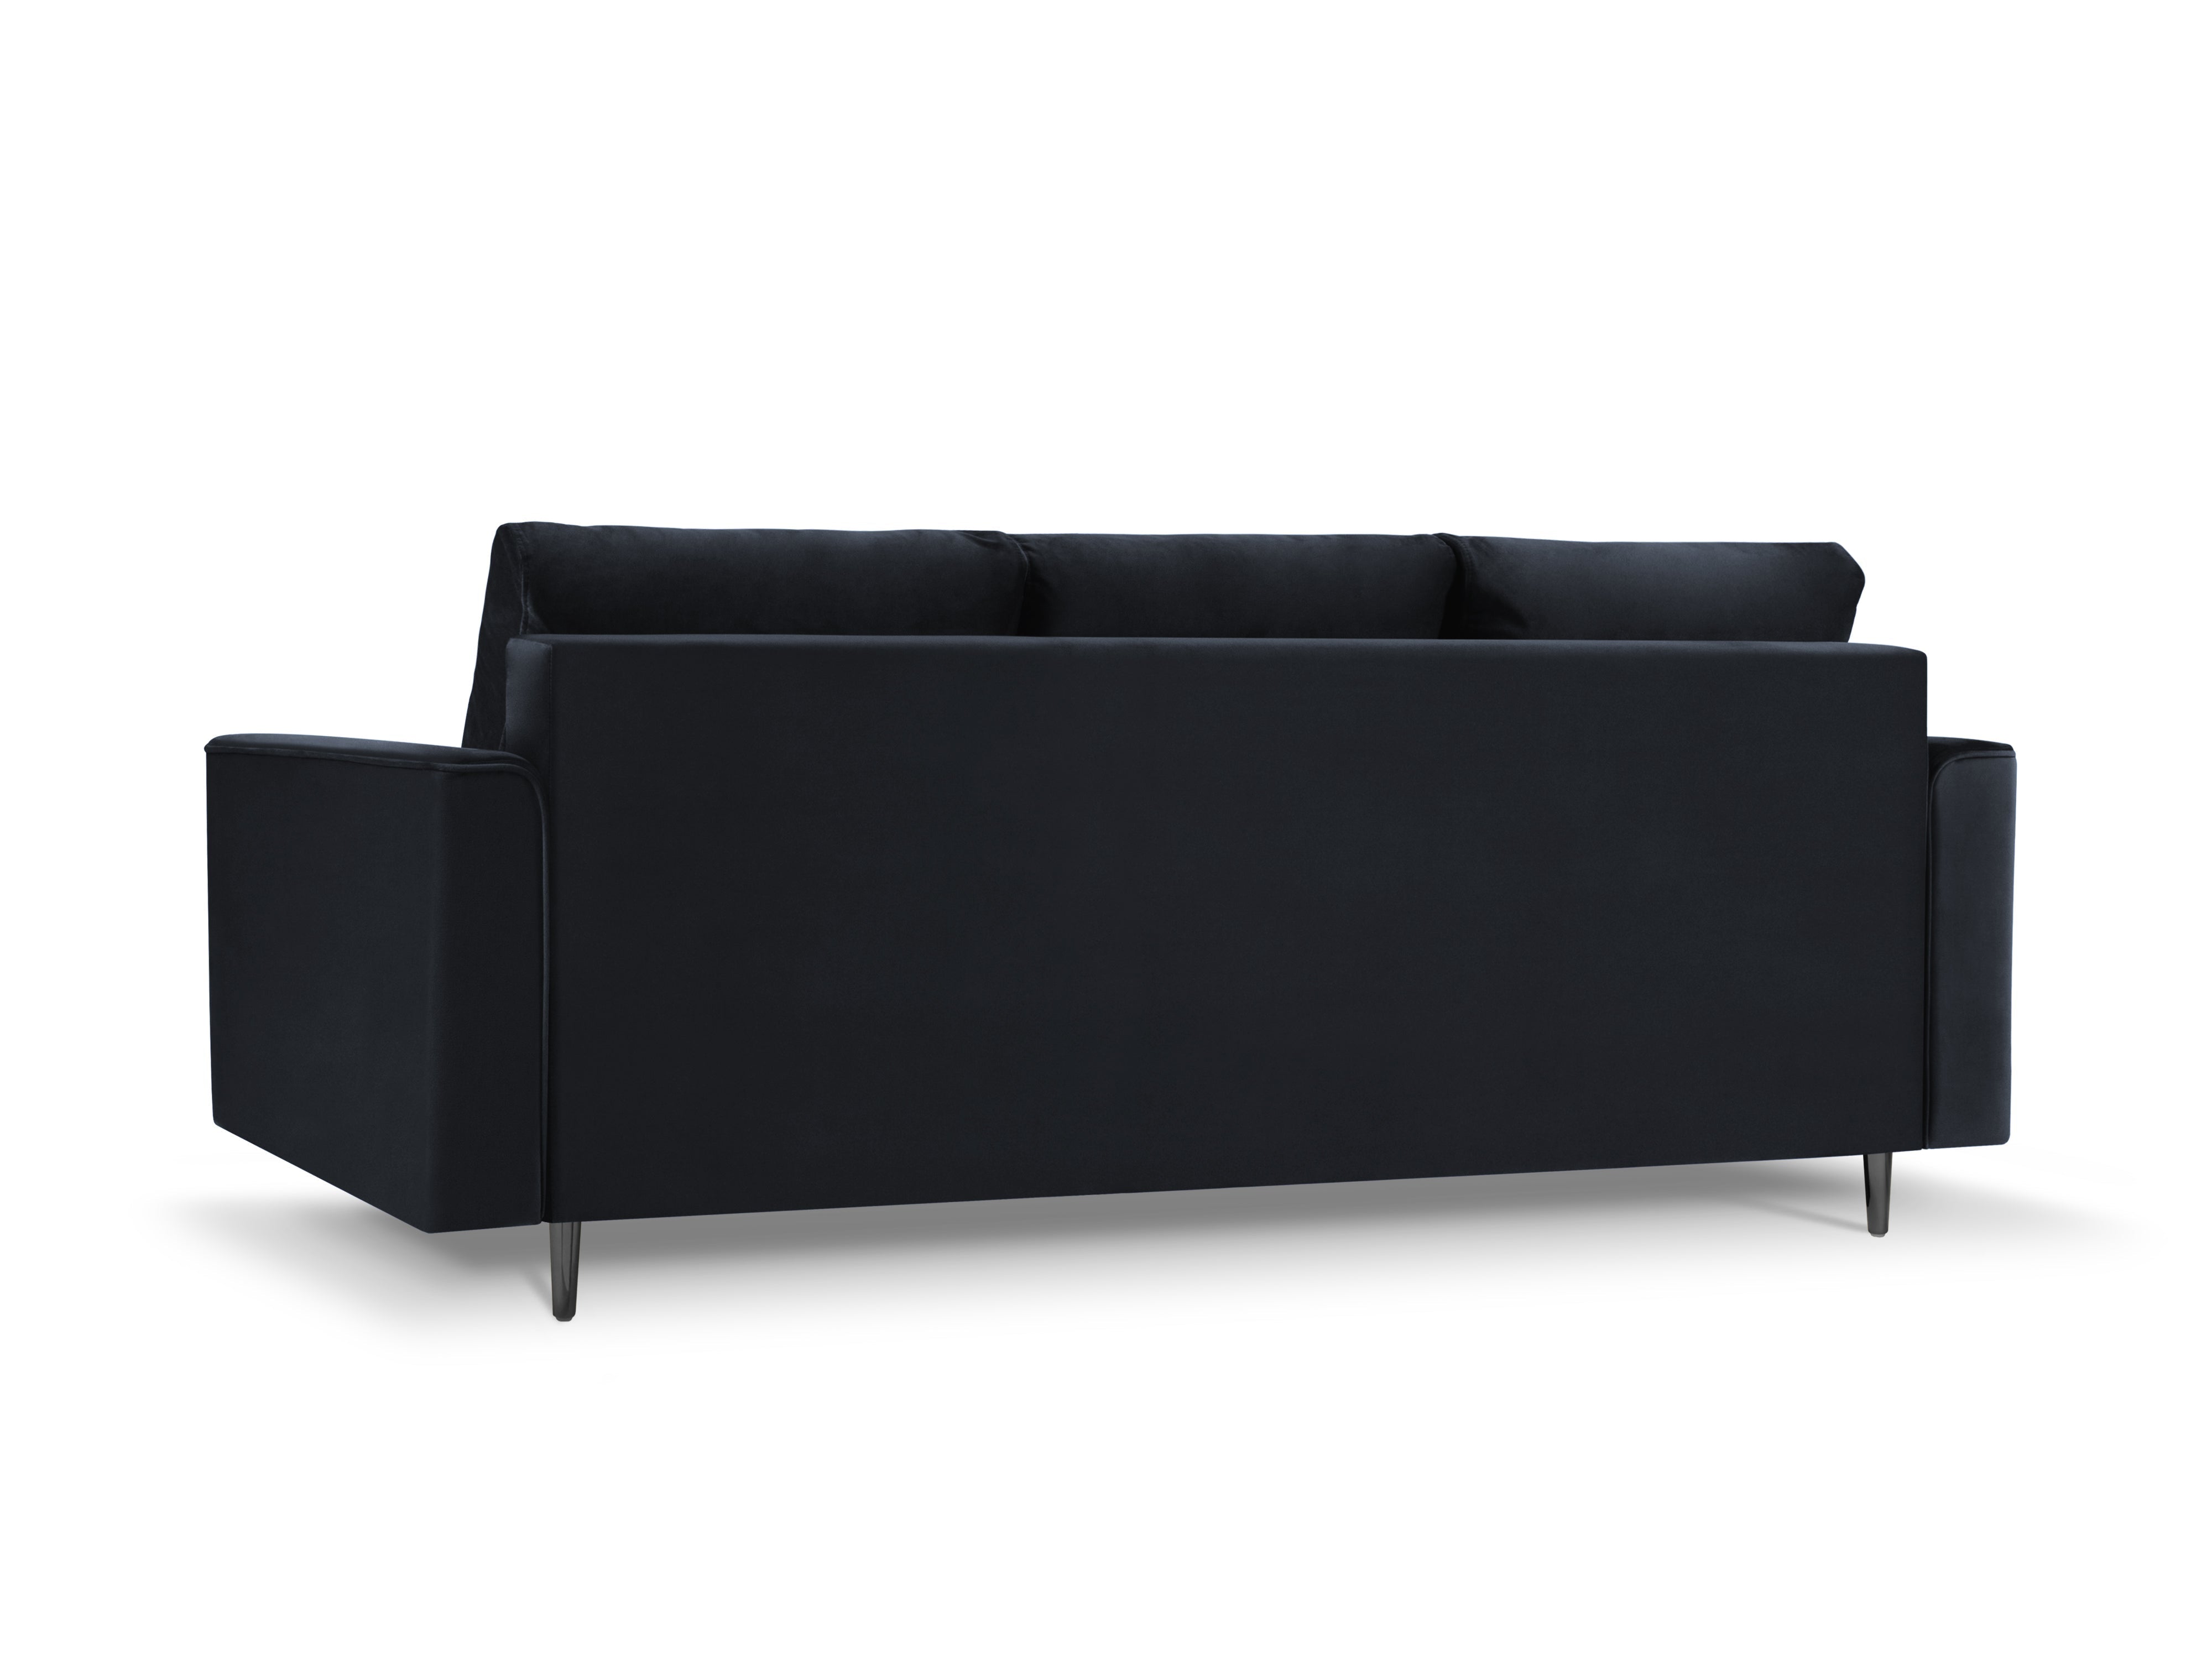 A dark blue sofa with a black base